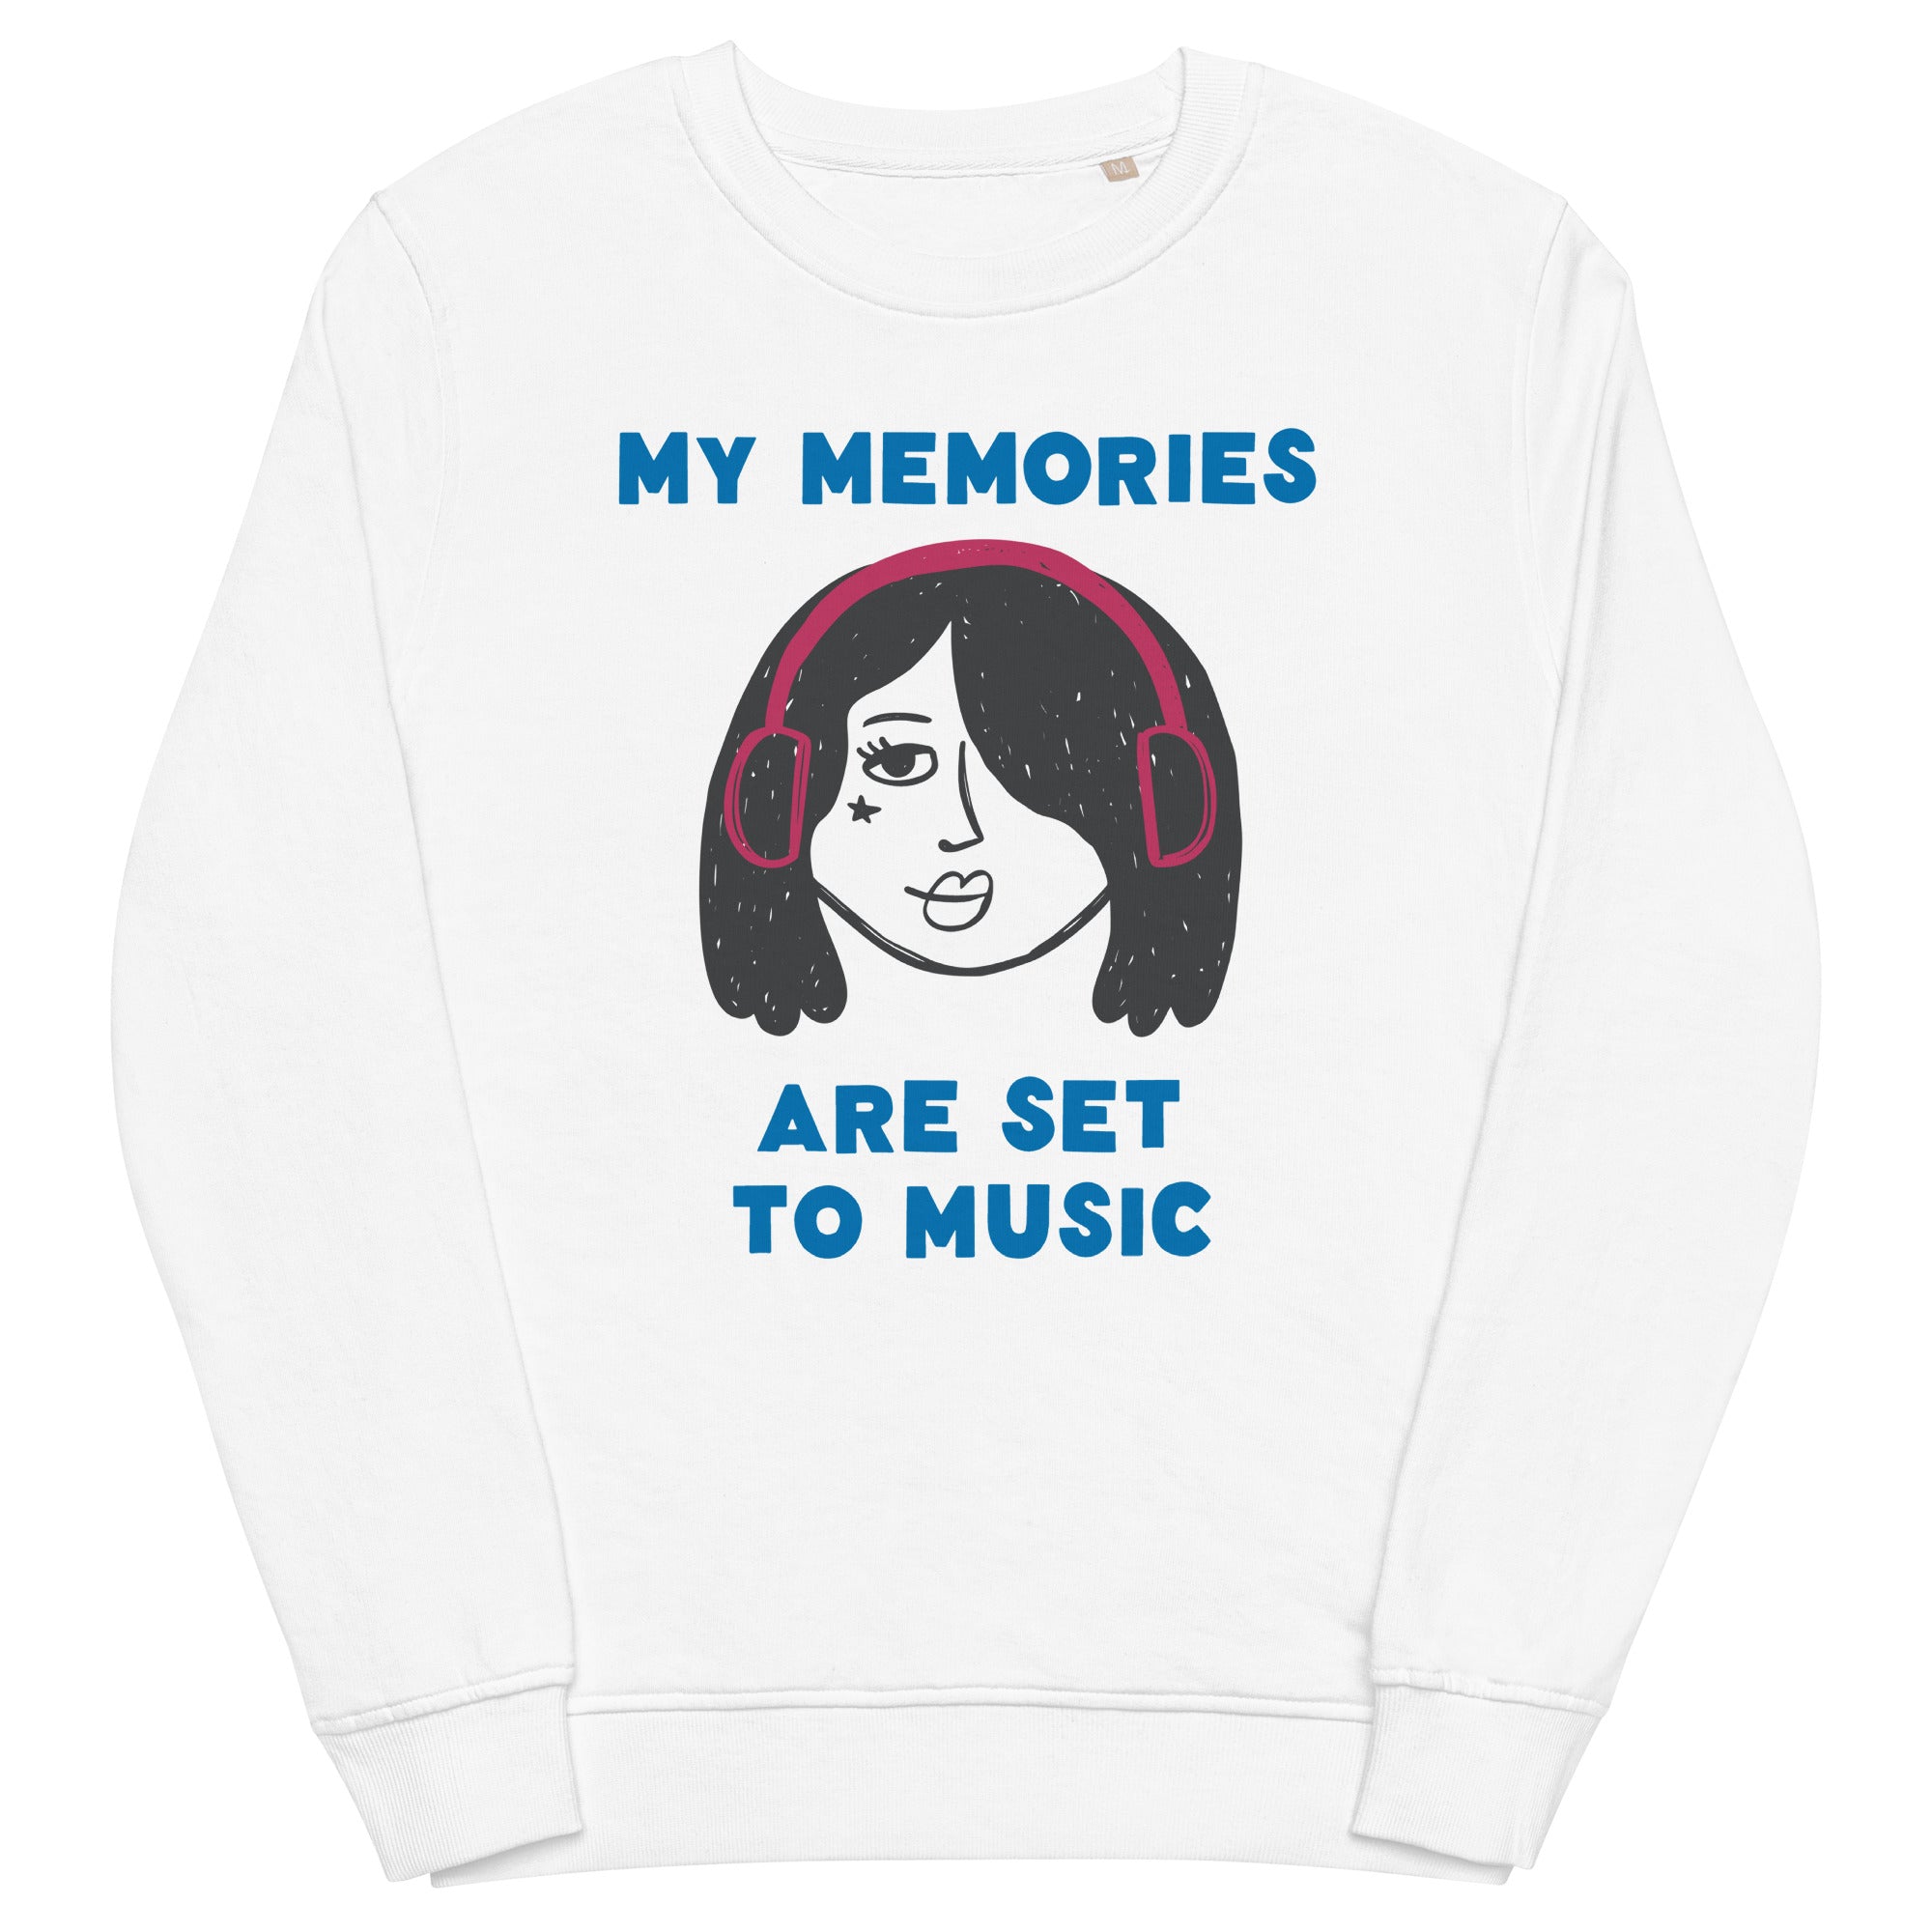 Memories - Organic/Recycled Sweatshirt